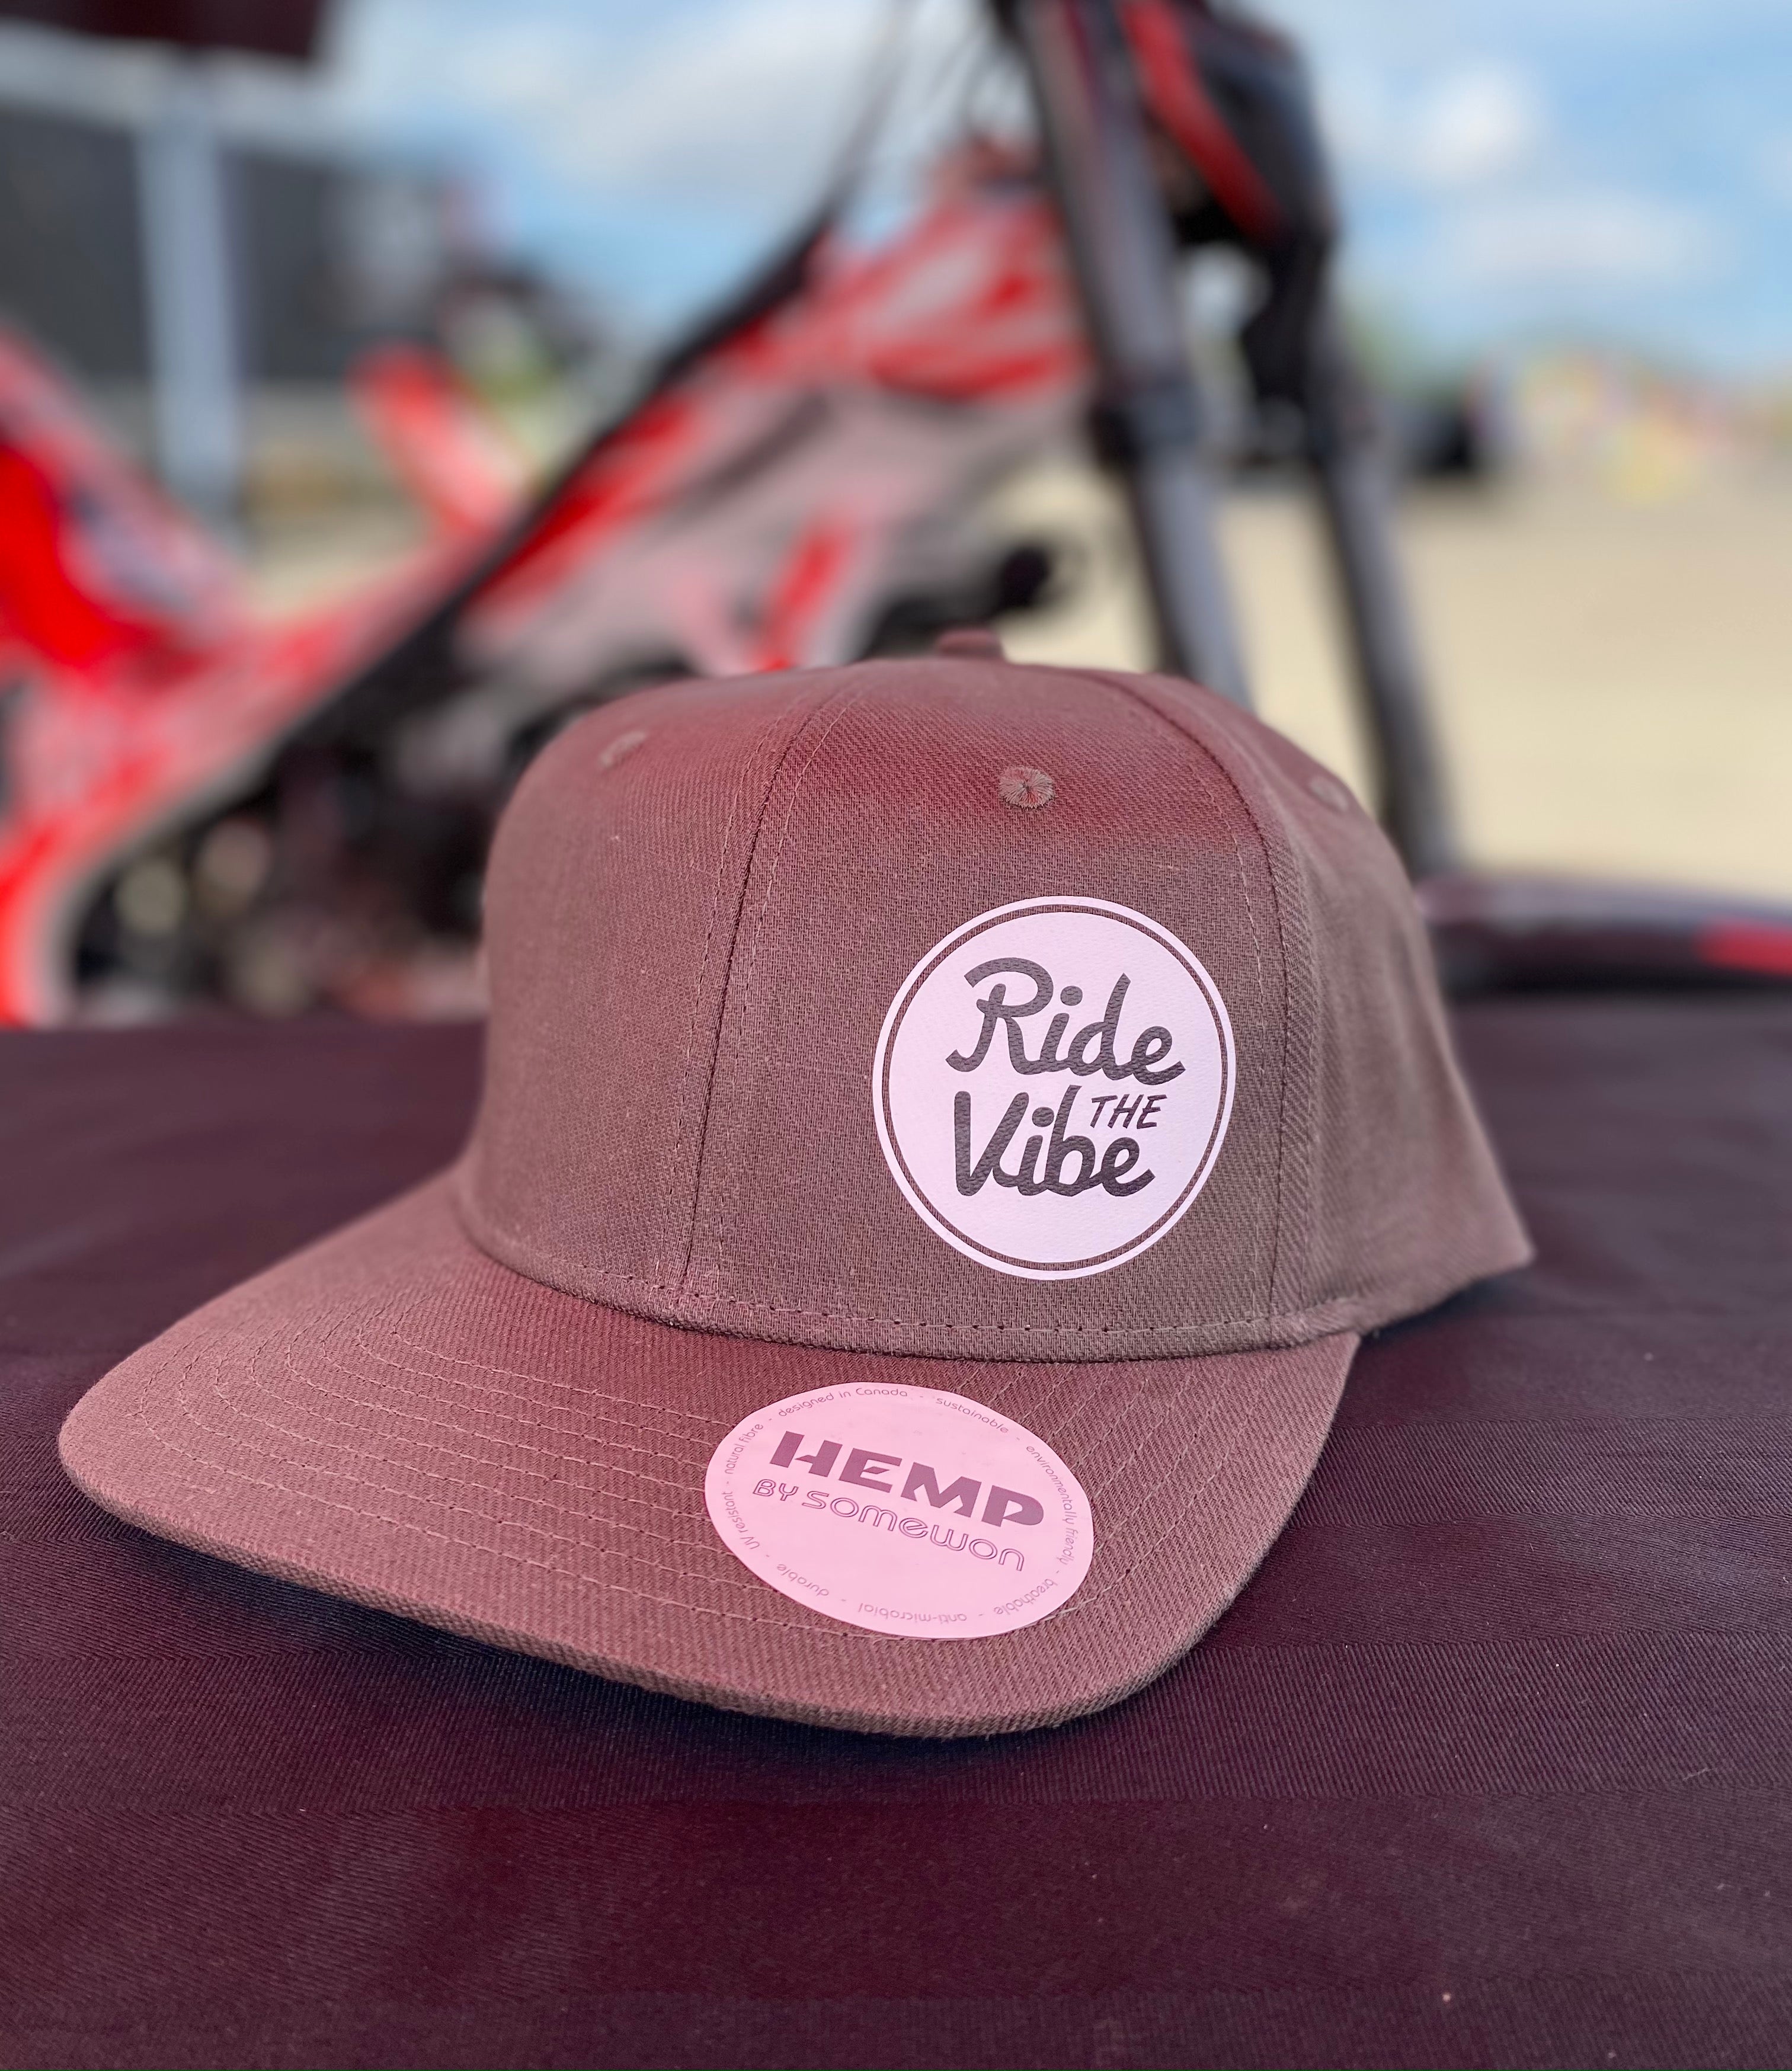 The Hemp Hat - Ride The Vibe